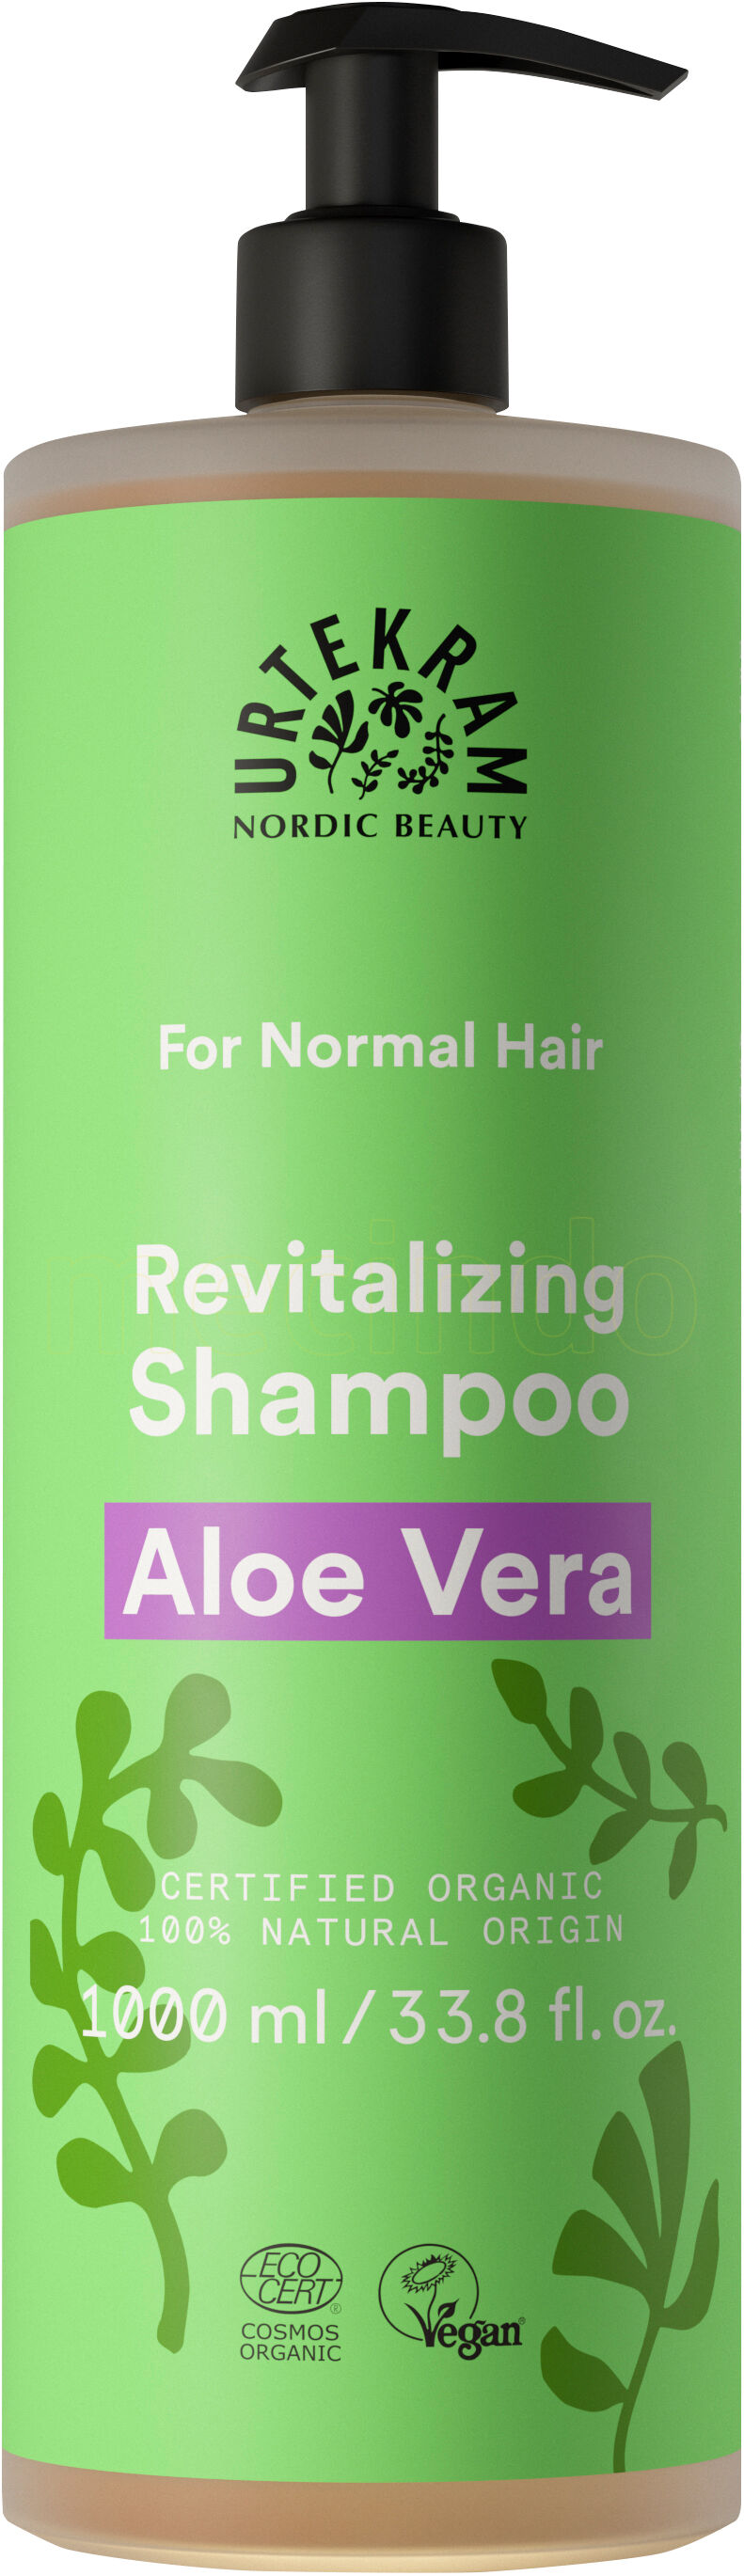 Urtekram Aloe Vera Shampoo - 1 Liter